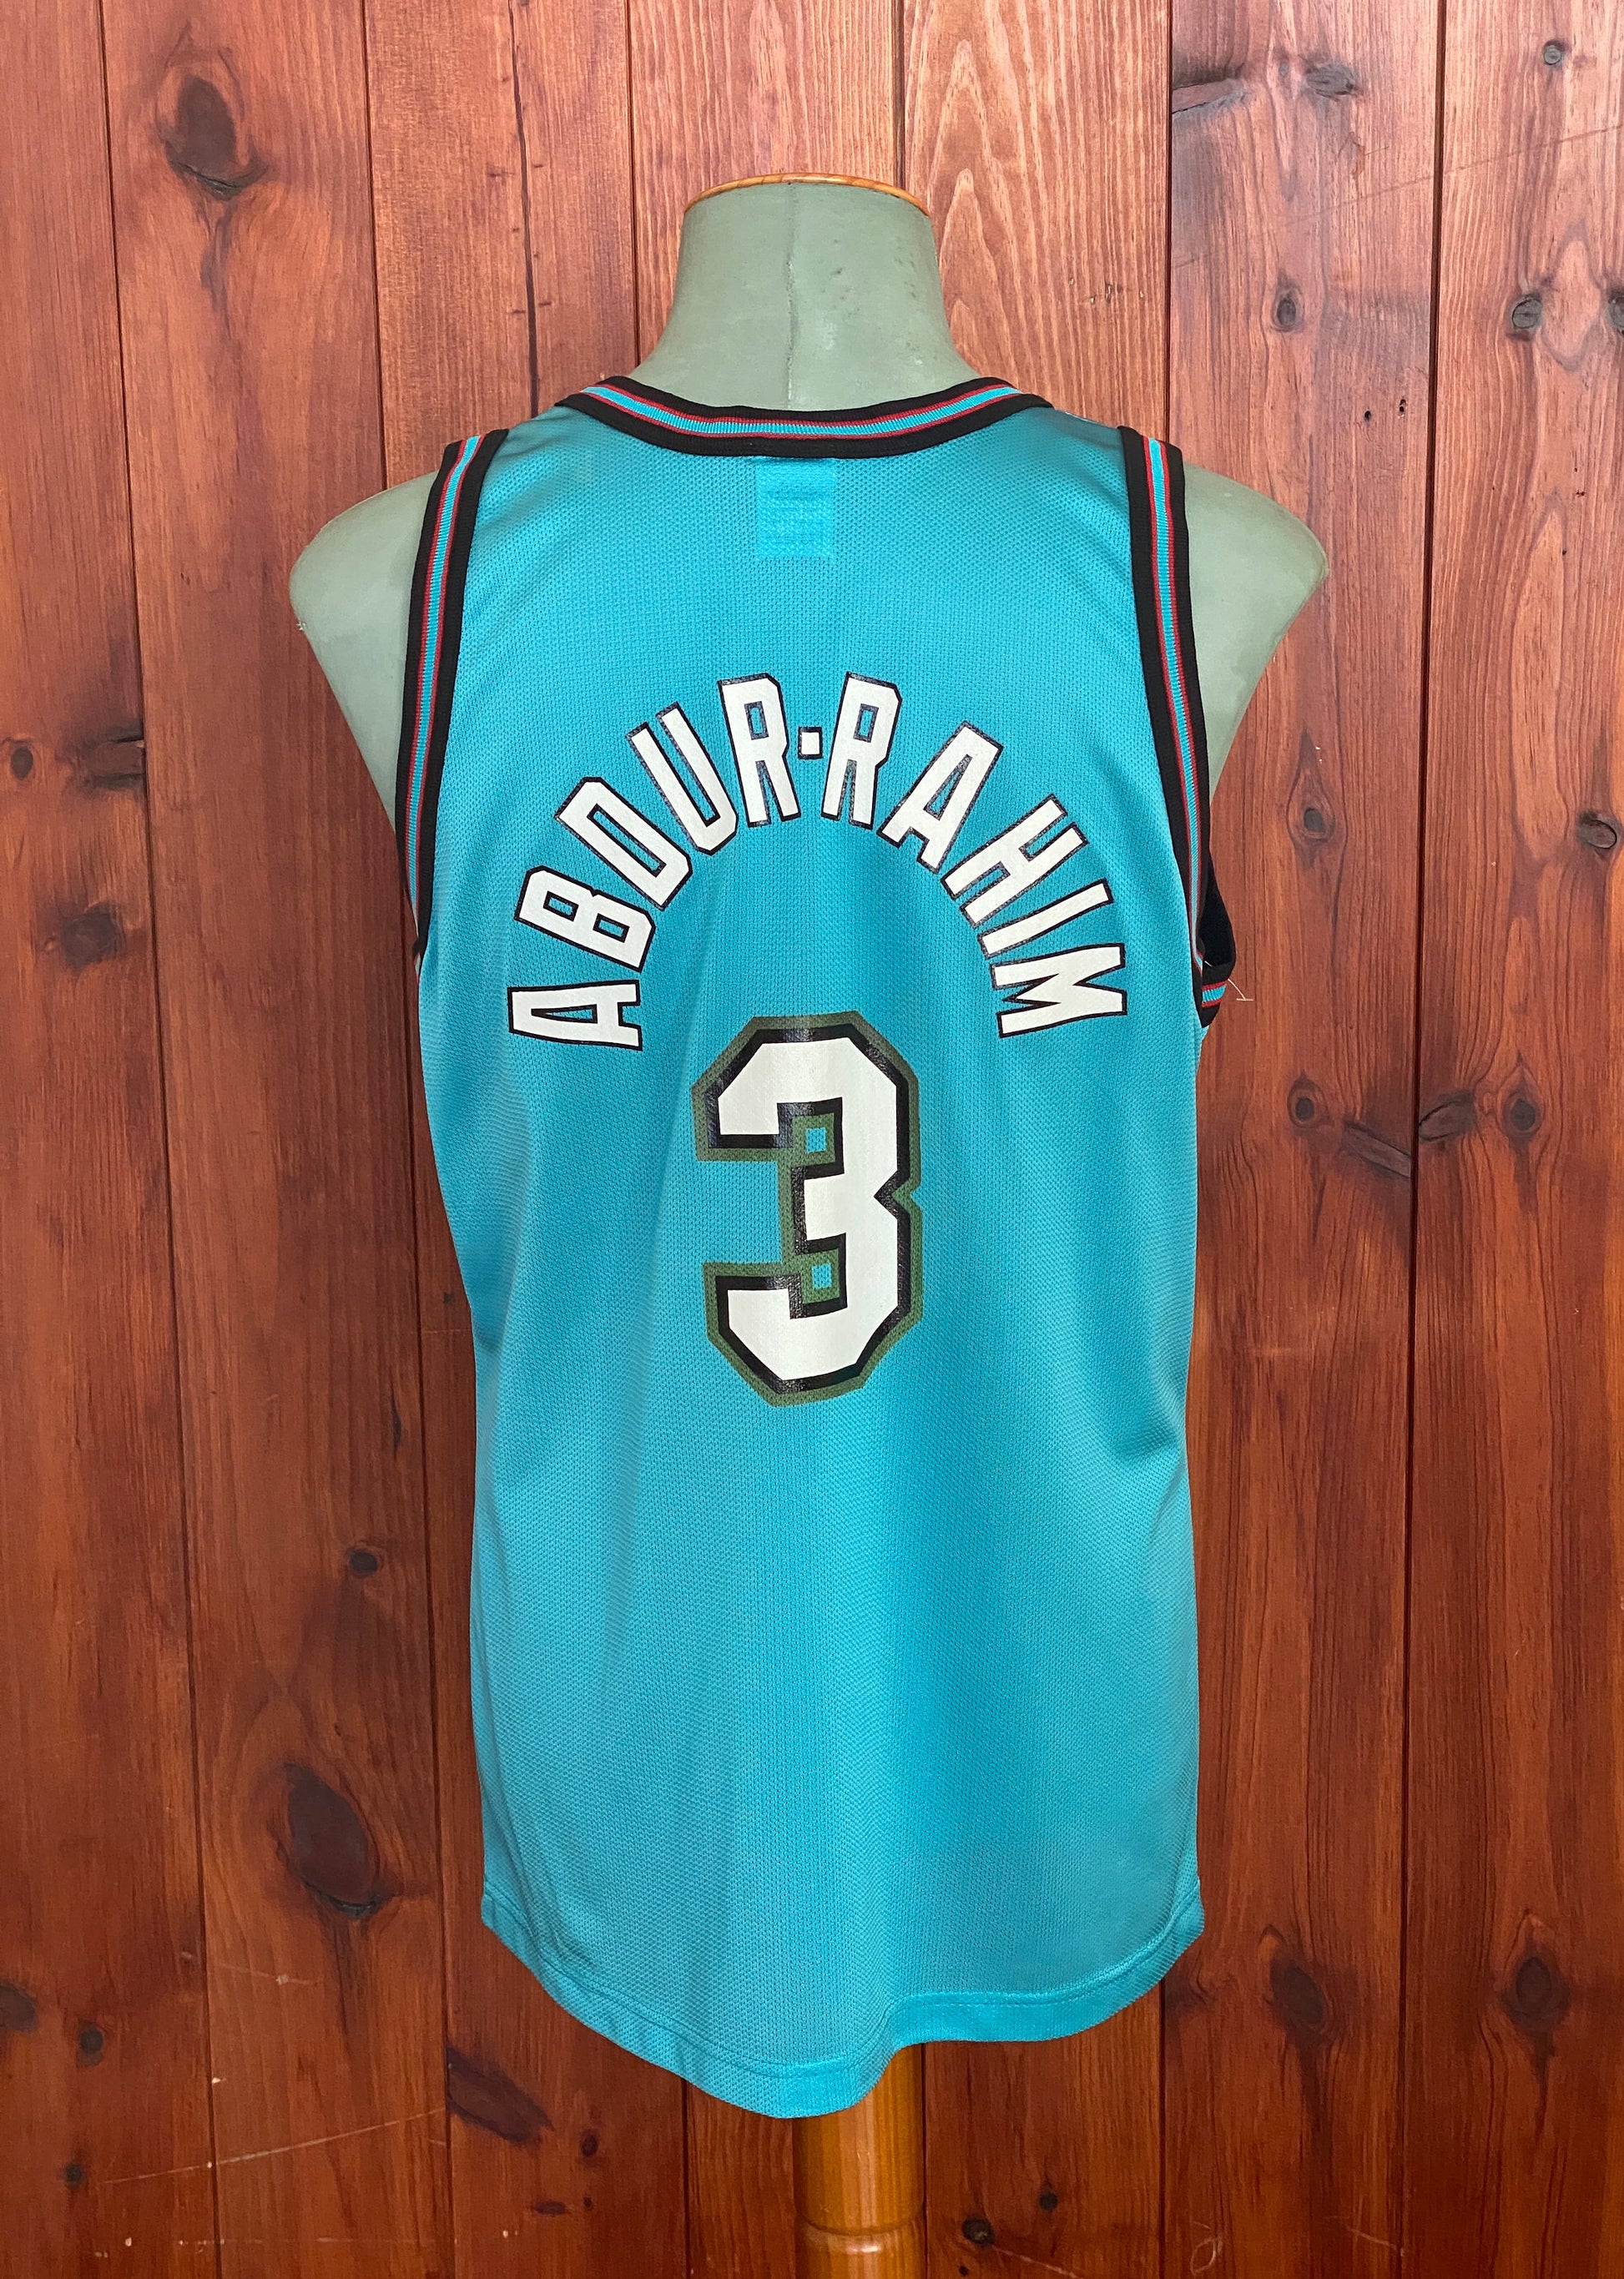 Vintage 90s NBA Grizzlies Abdur-Rahim #3 Champion jersey, size 44 - back view.